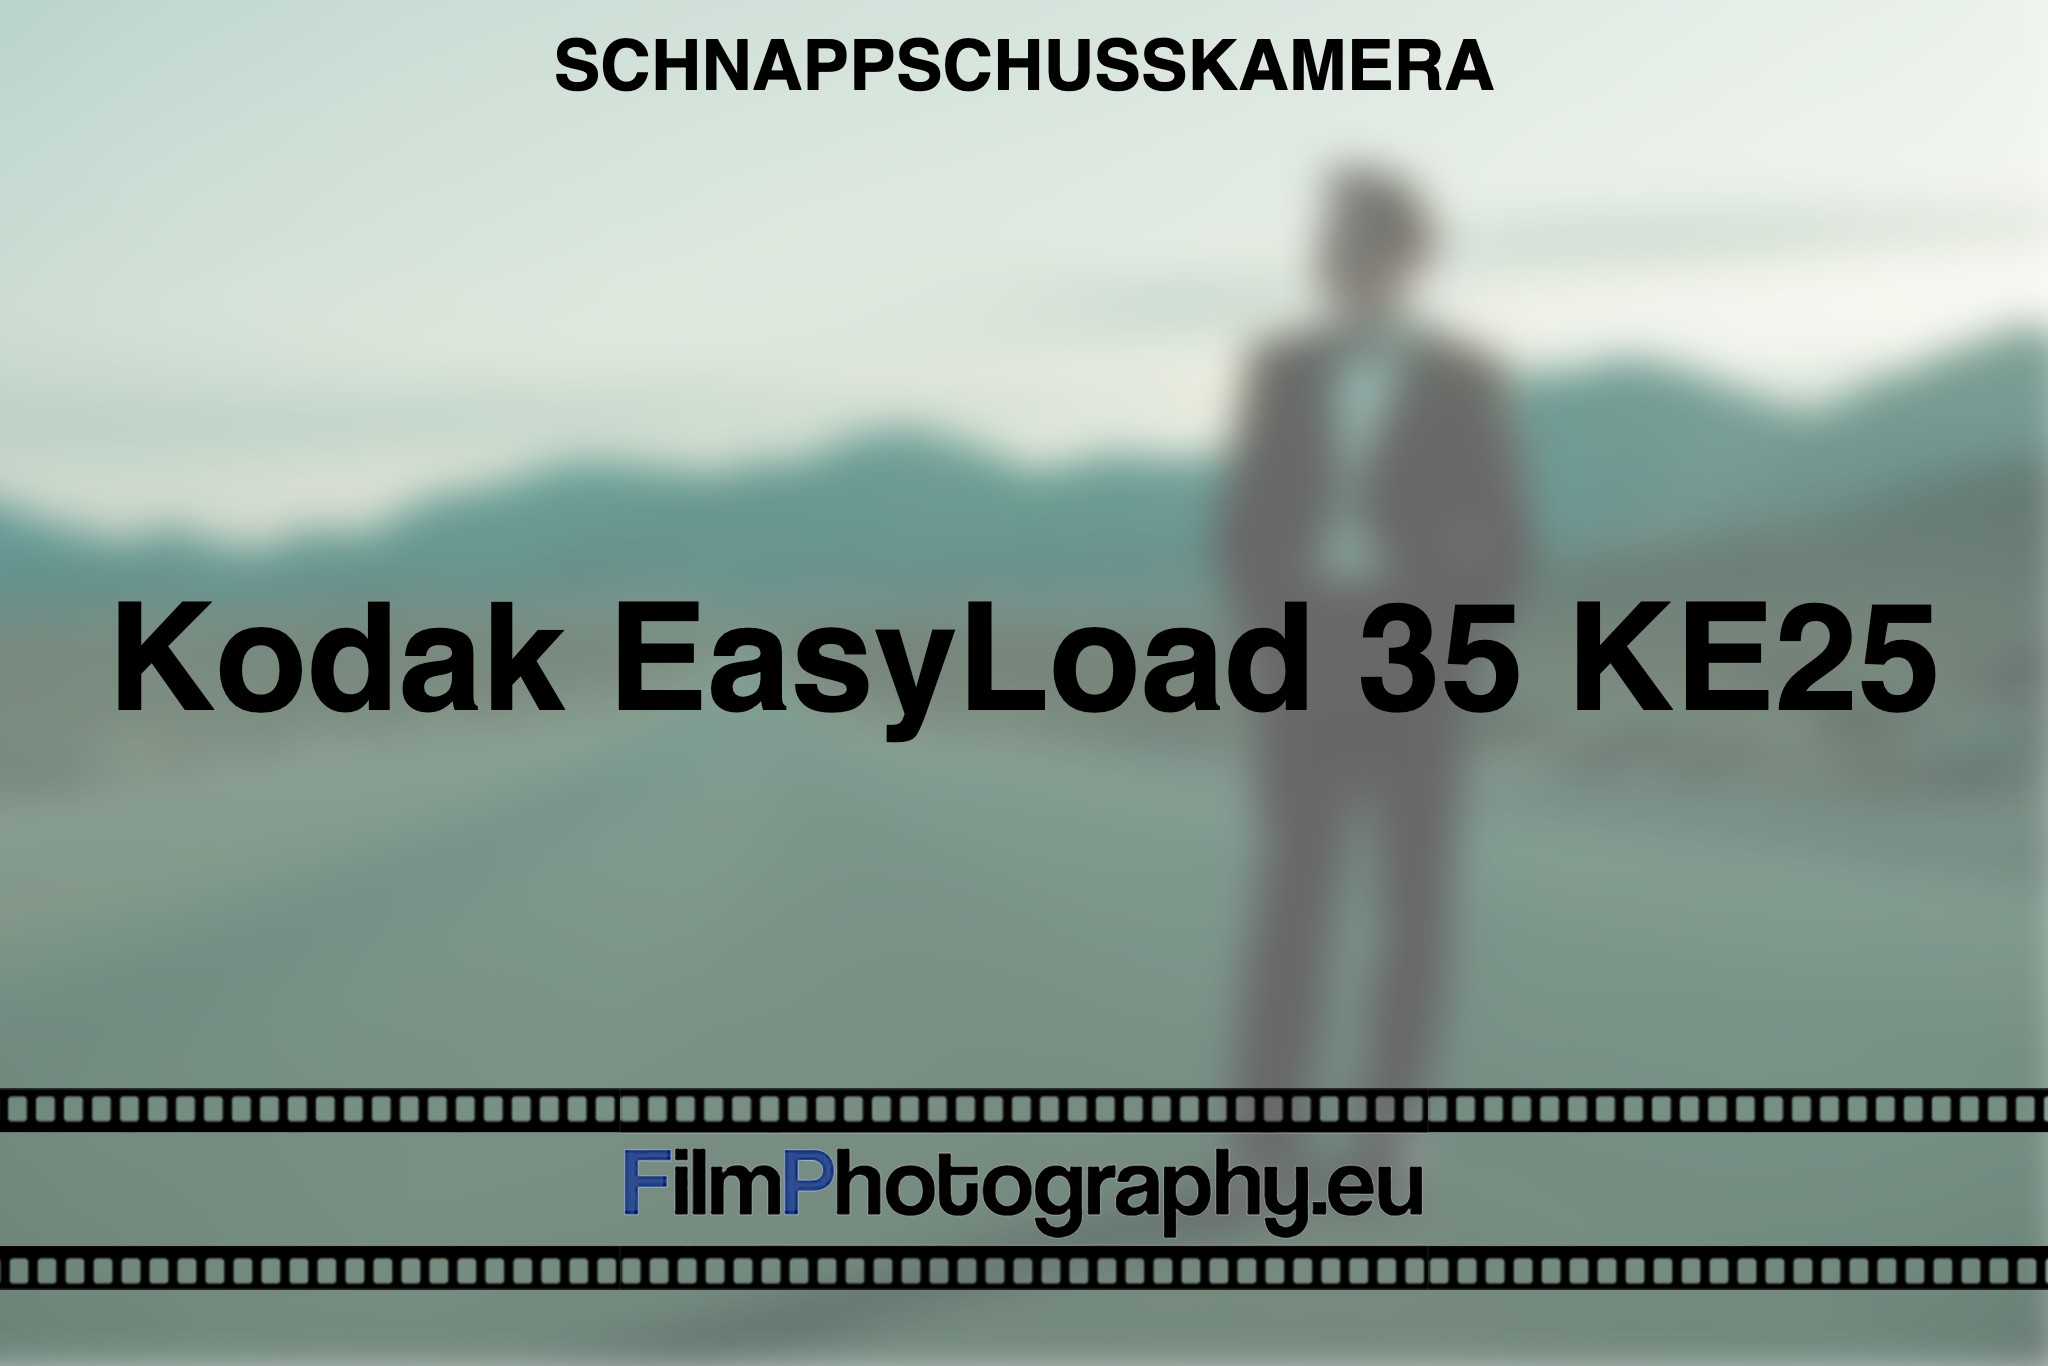 kodak-easyload-35-ke25-schnappschusskamera-bnv